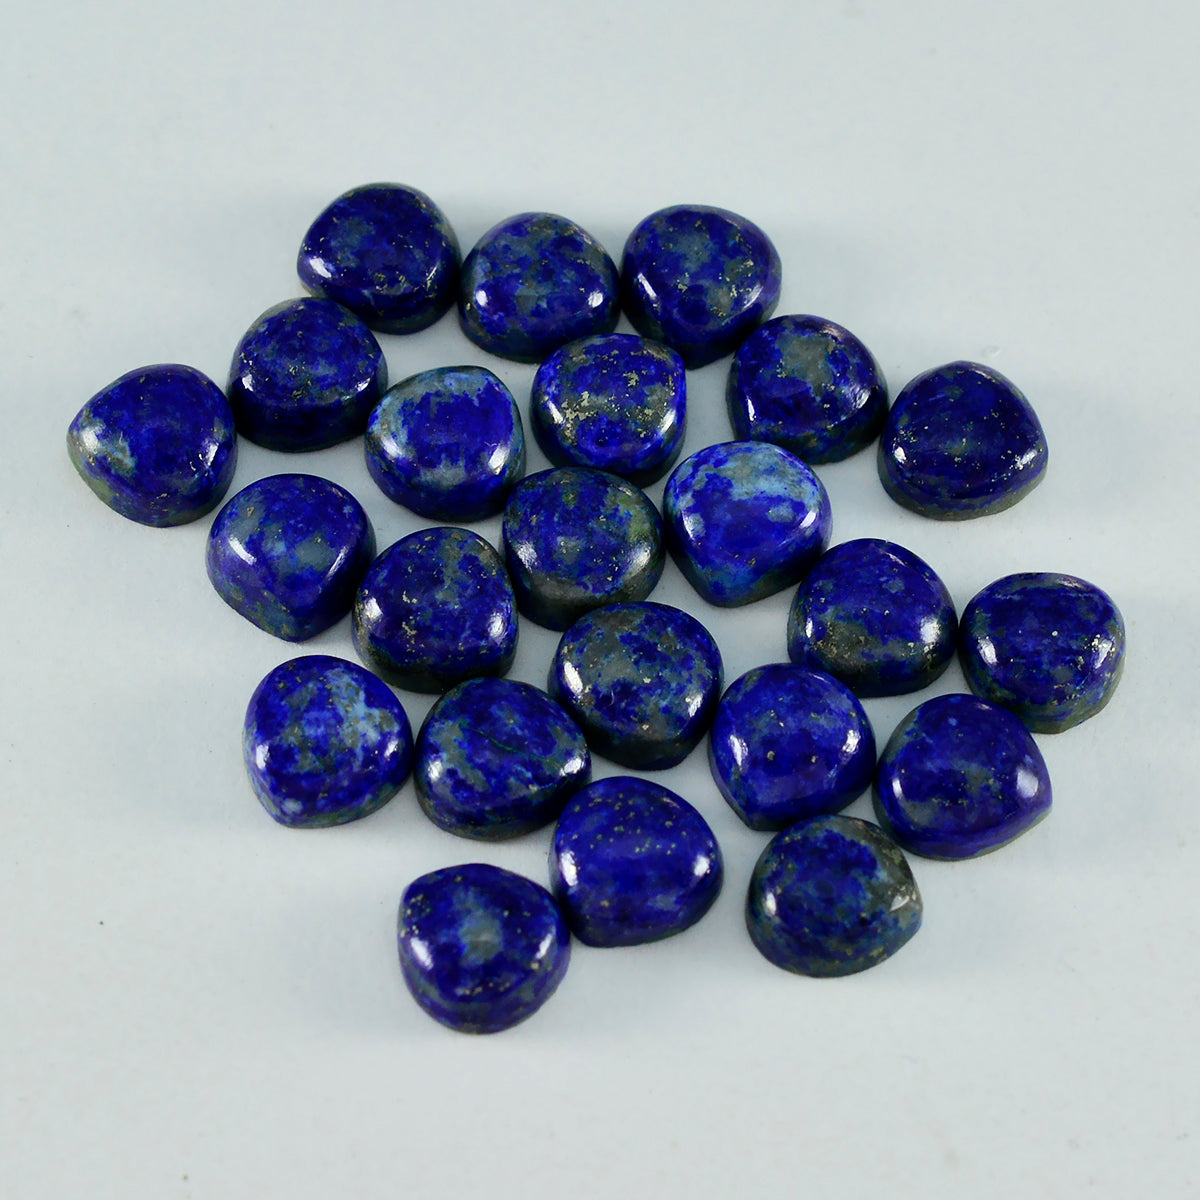 riyogems 1 st blå lapis lazuli cabochon 5x5 mm hjärtform aa kvalitets lös pärla